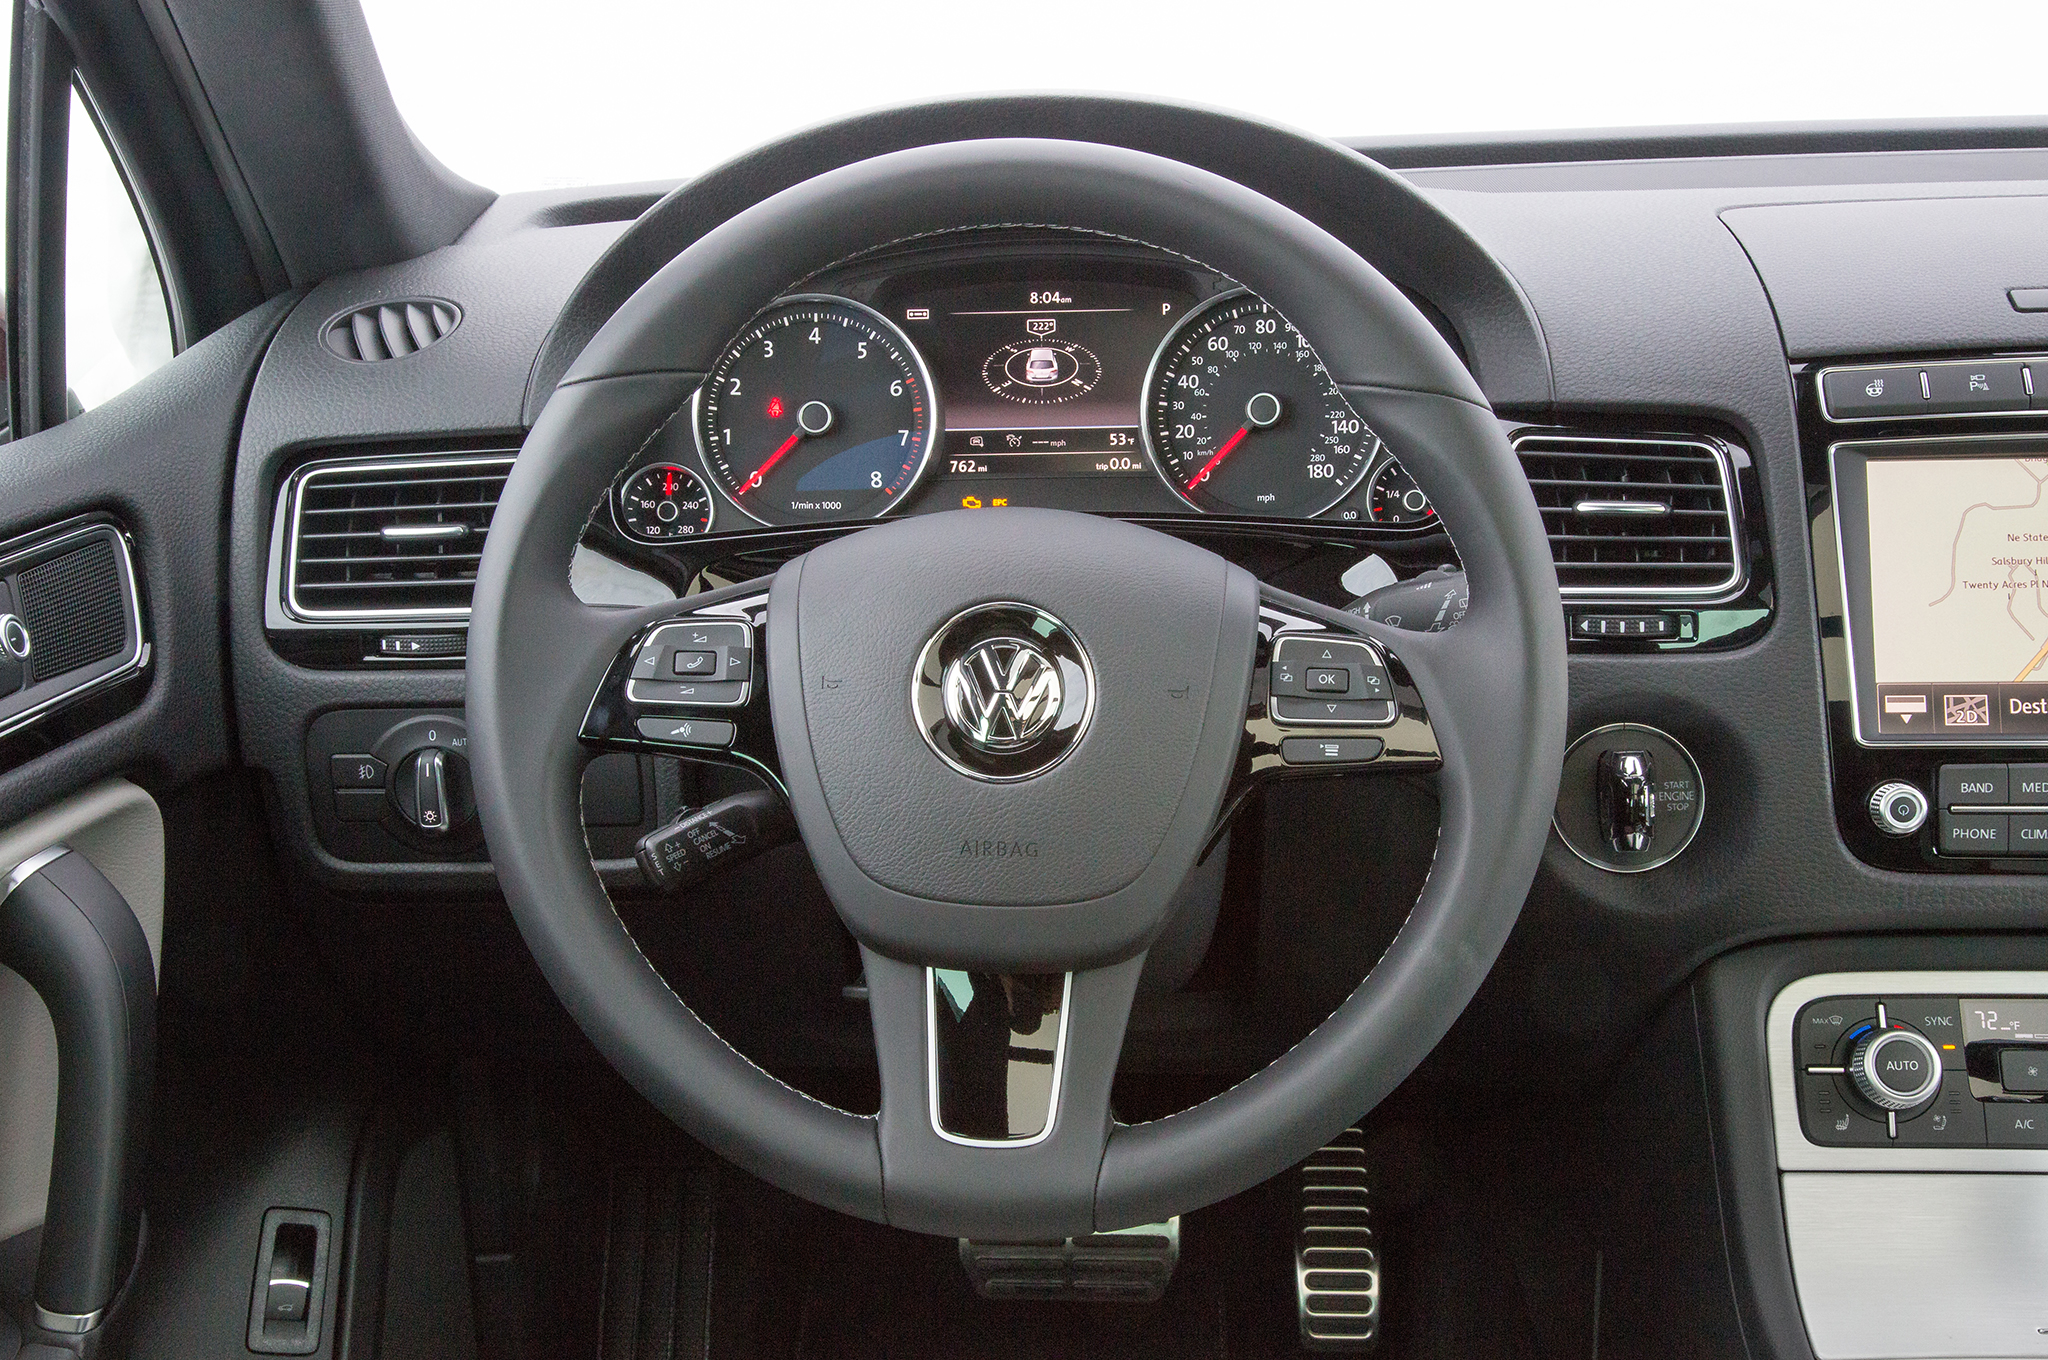 Volkswagen Touareg Backgrounds, Compatible - PC, Mobile, Gadgets| 2048x1360 px